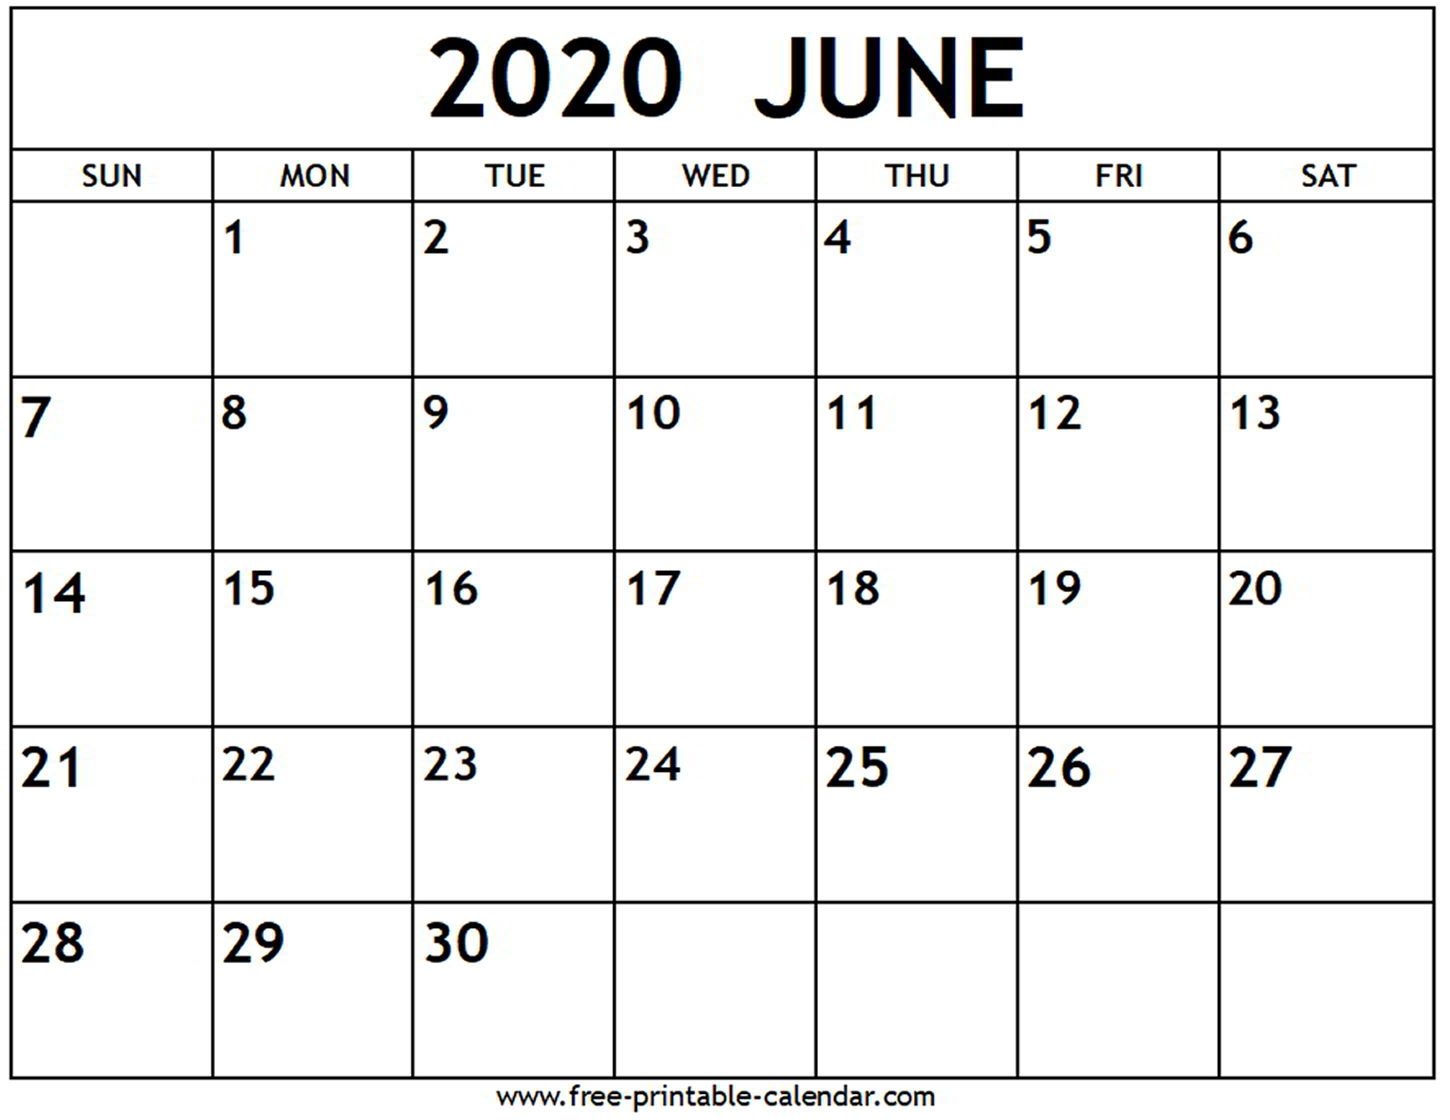 June 2020 Calendar - Free-Printable-Calendar